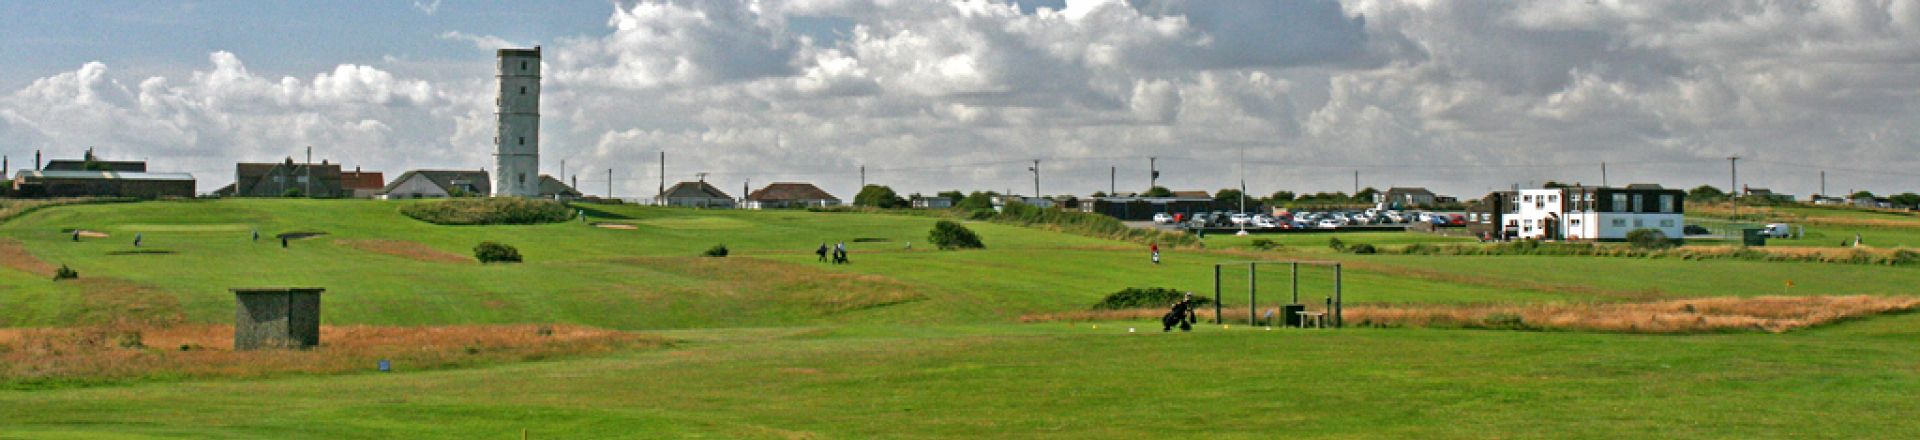 Flamborough Golf Course